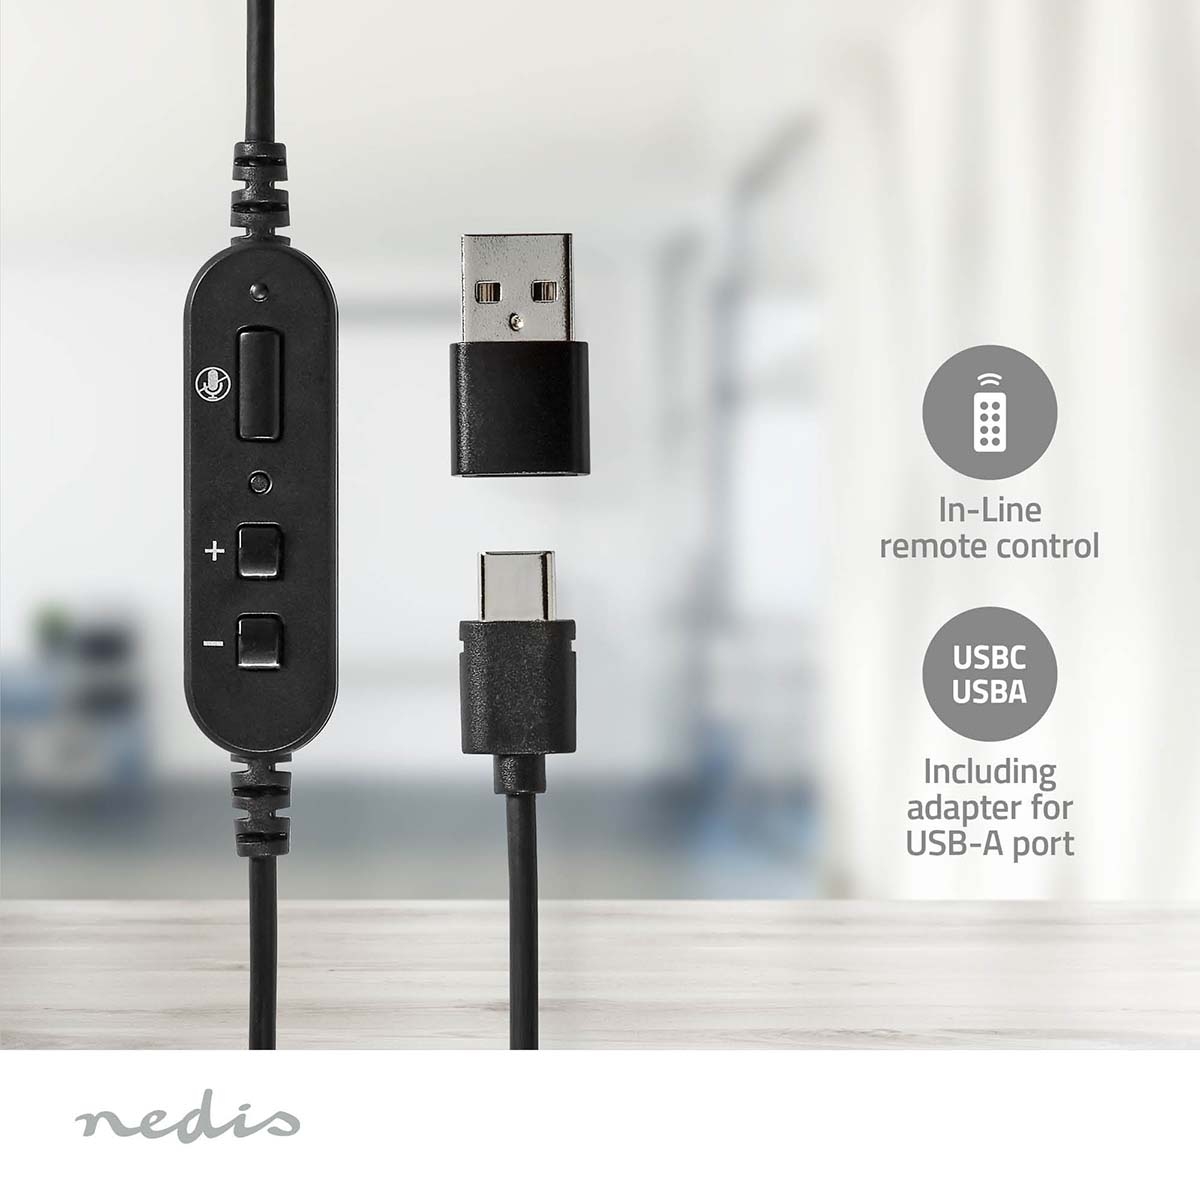 Nedis Over-Ear USB PC Headset